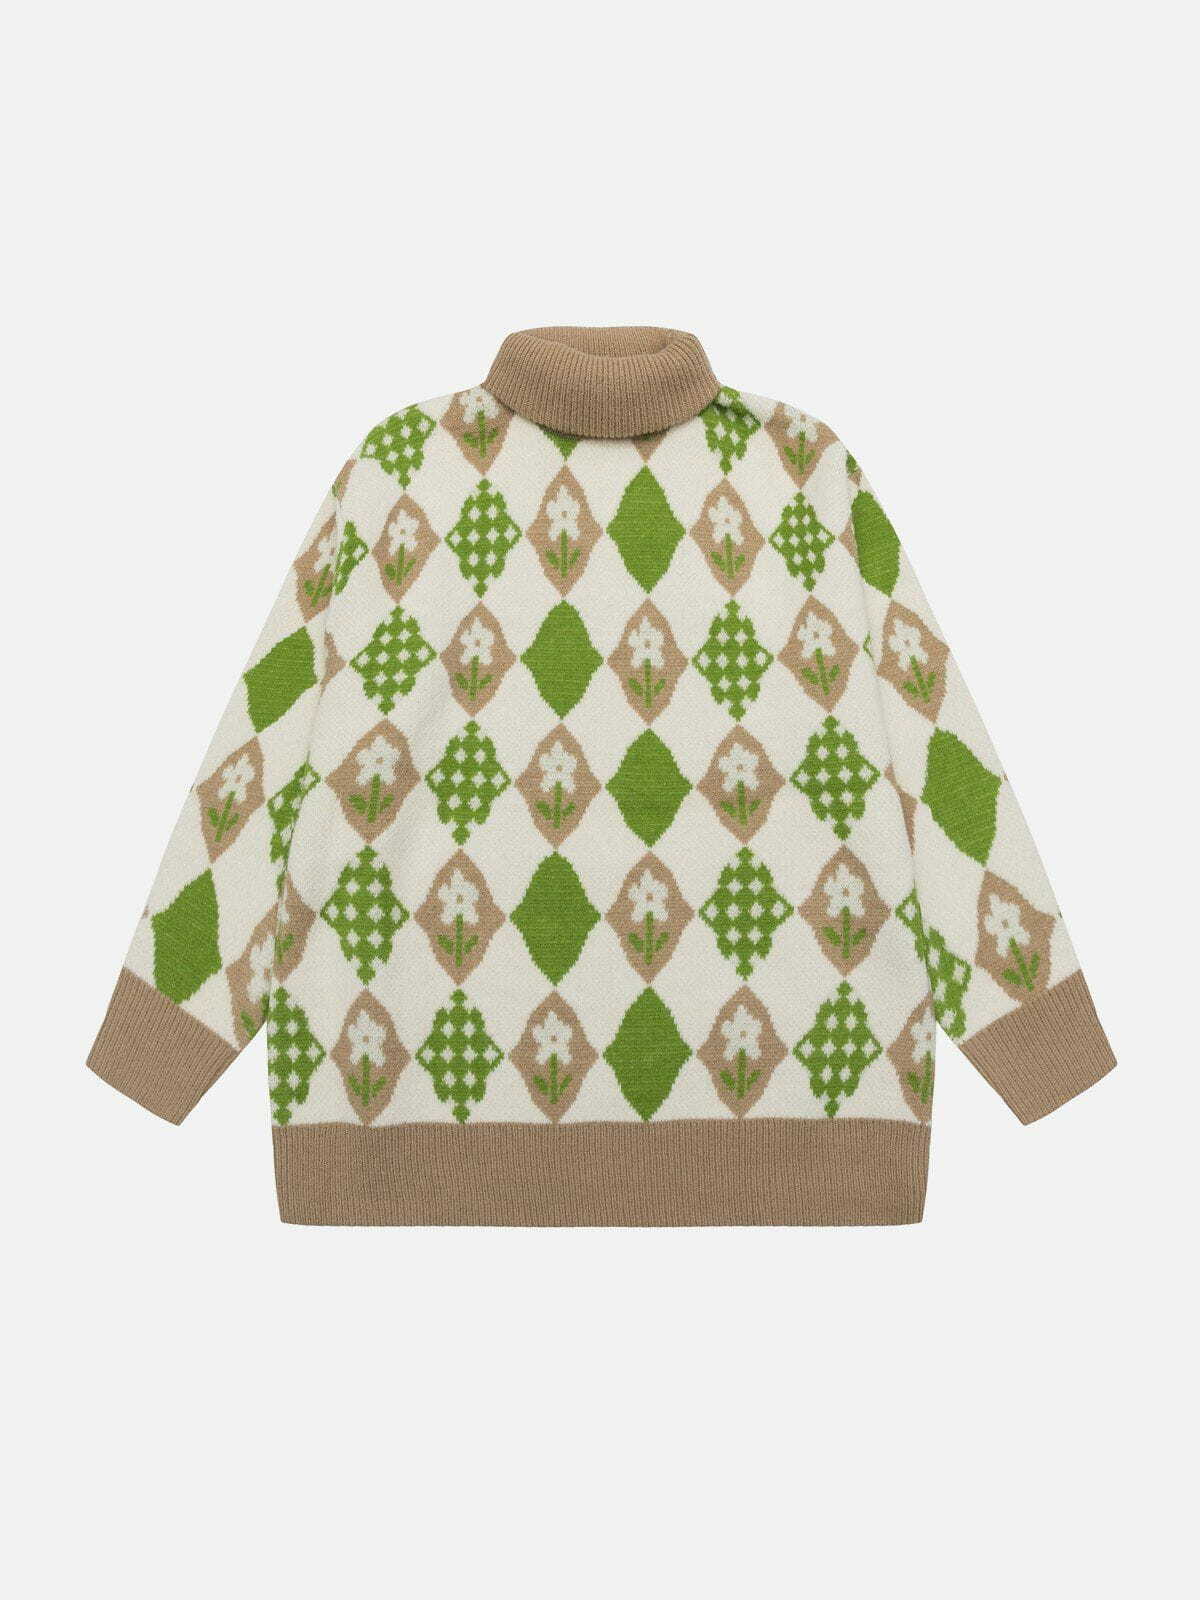 floral argyle turtleneck sweater edgy & vibrant streetwear 4528